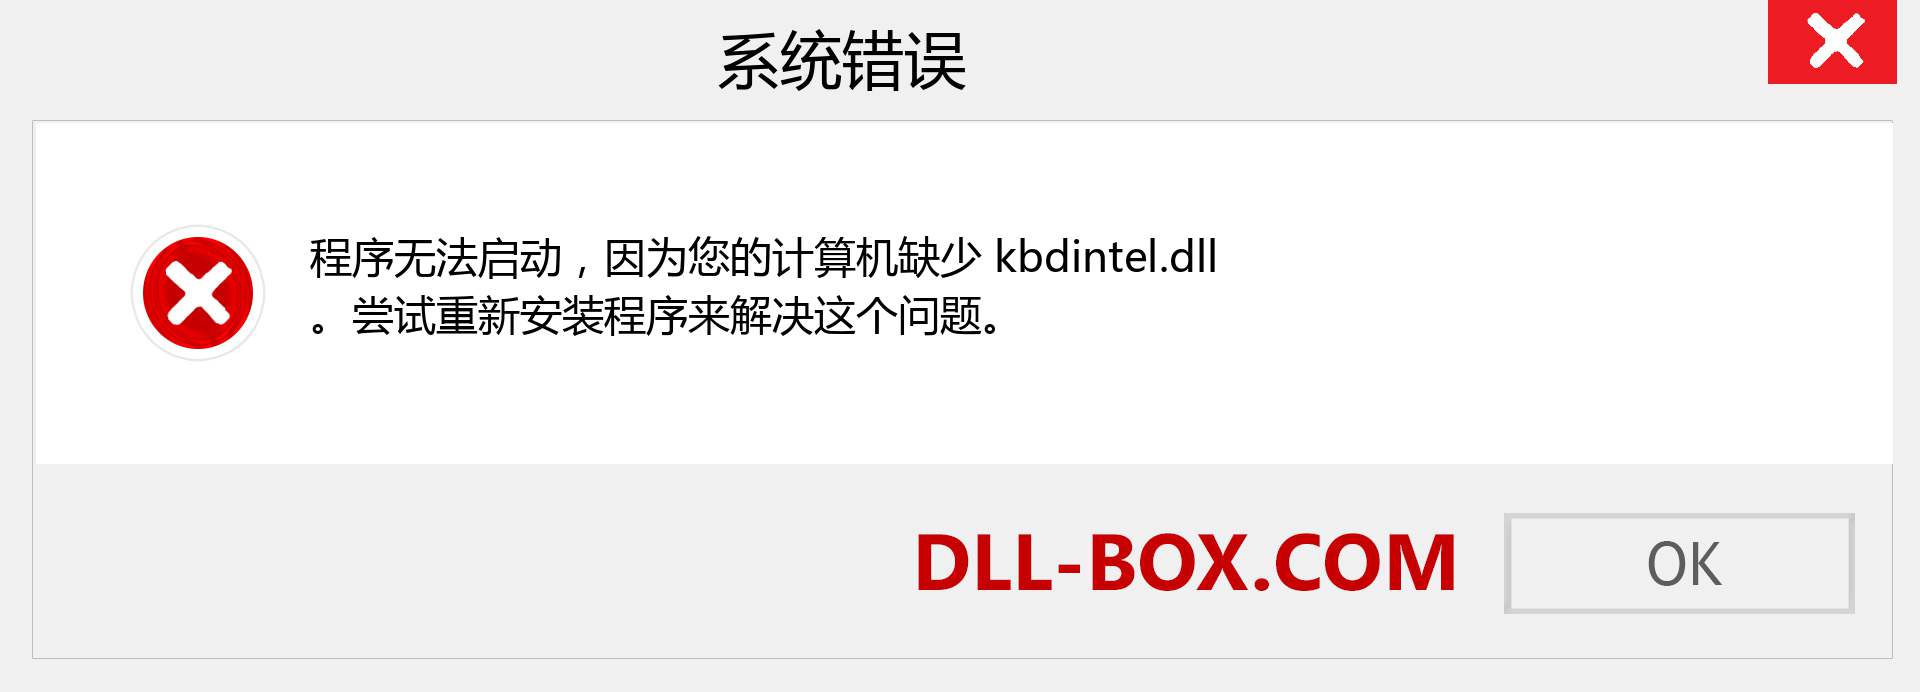 kbdintel.dll 文件丢失？。 适用于 Windows 7、8、10 的下载 - 修复 Windows、照片、图像上的 kbdintel dll 丢失错误